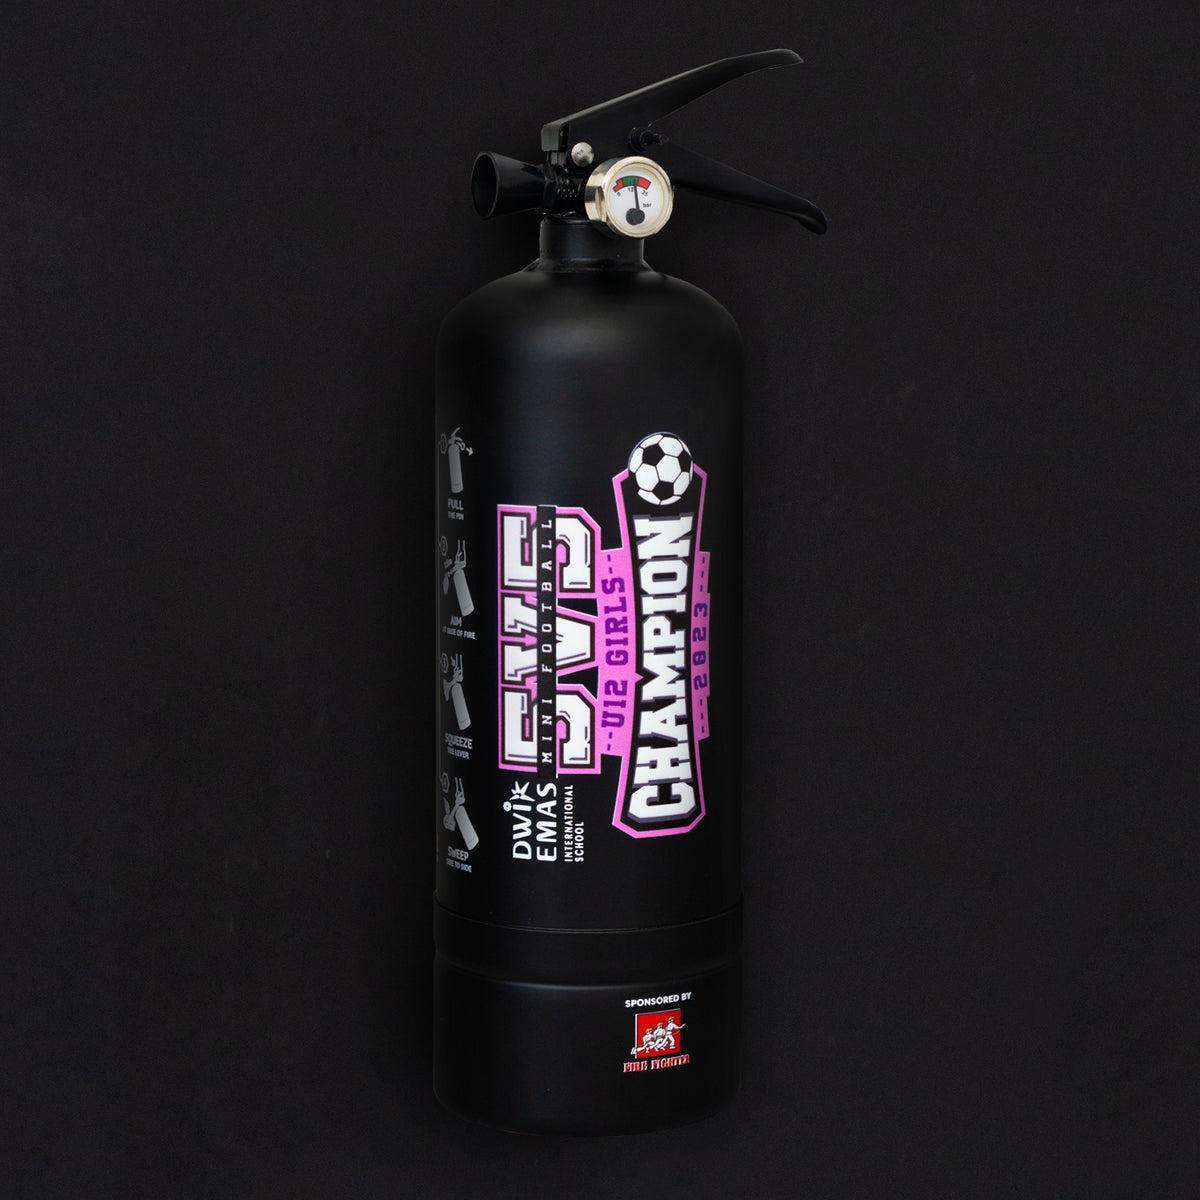 Seesen Chemical Berhad Fire Extinguisher